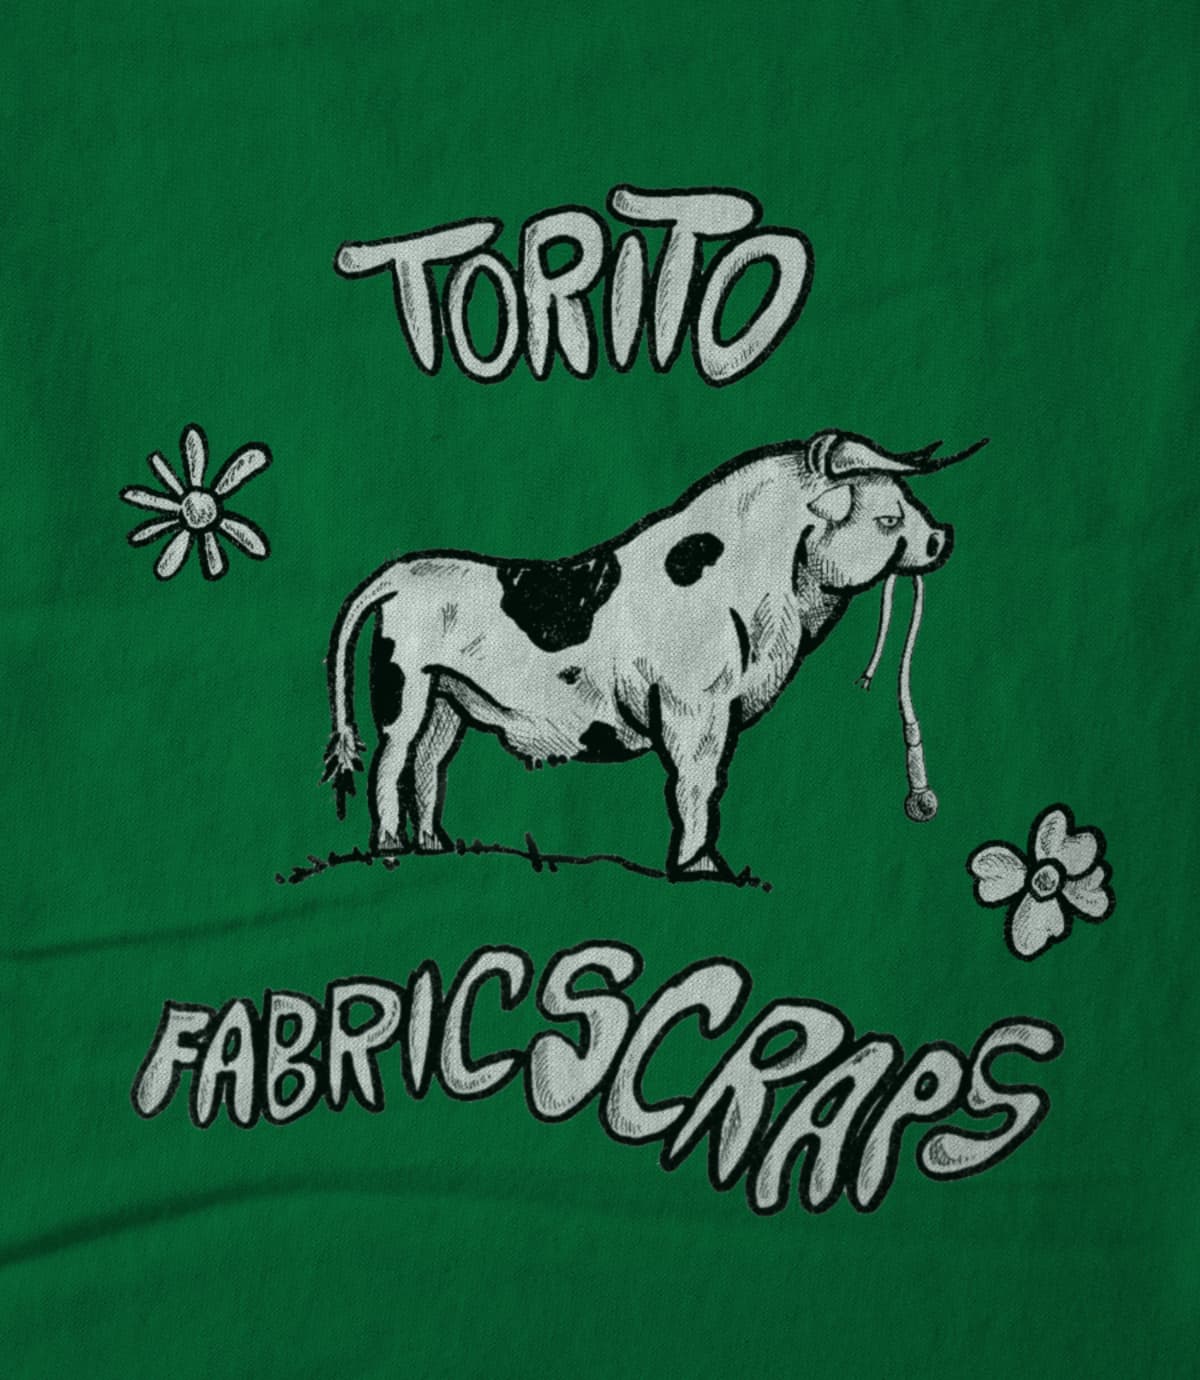 U don t deserve this beautiful art torito fabric scraps 1514755975